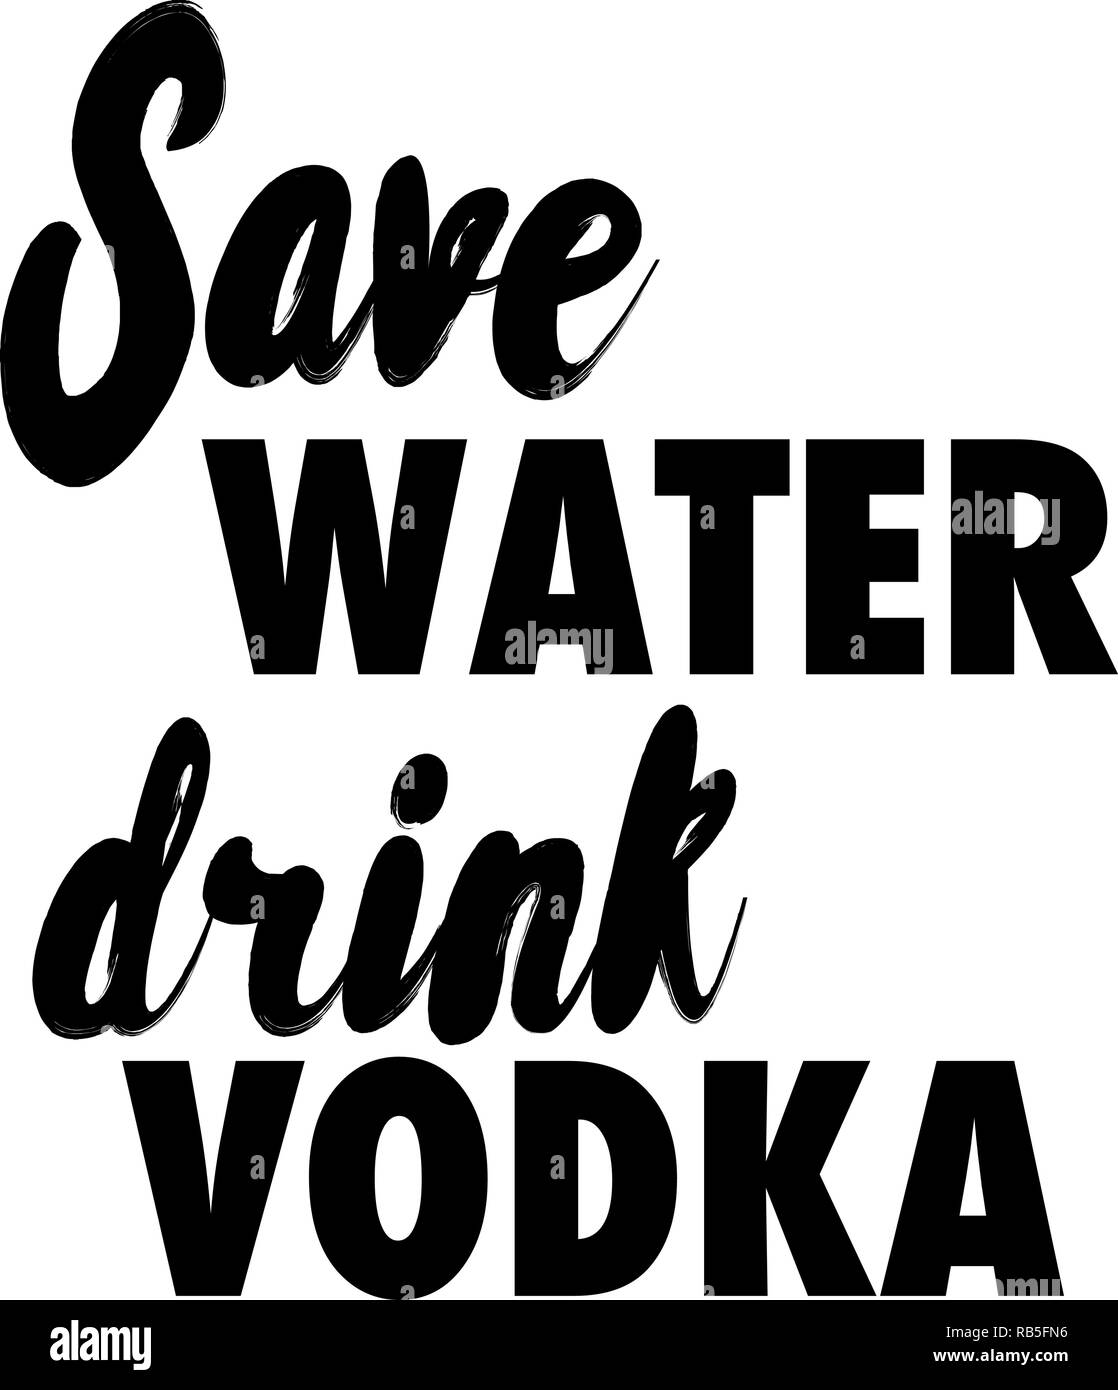 Save water drink vodka slogan Stock Vector